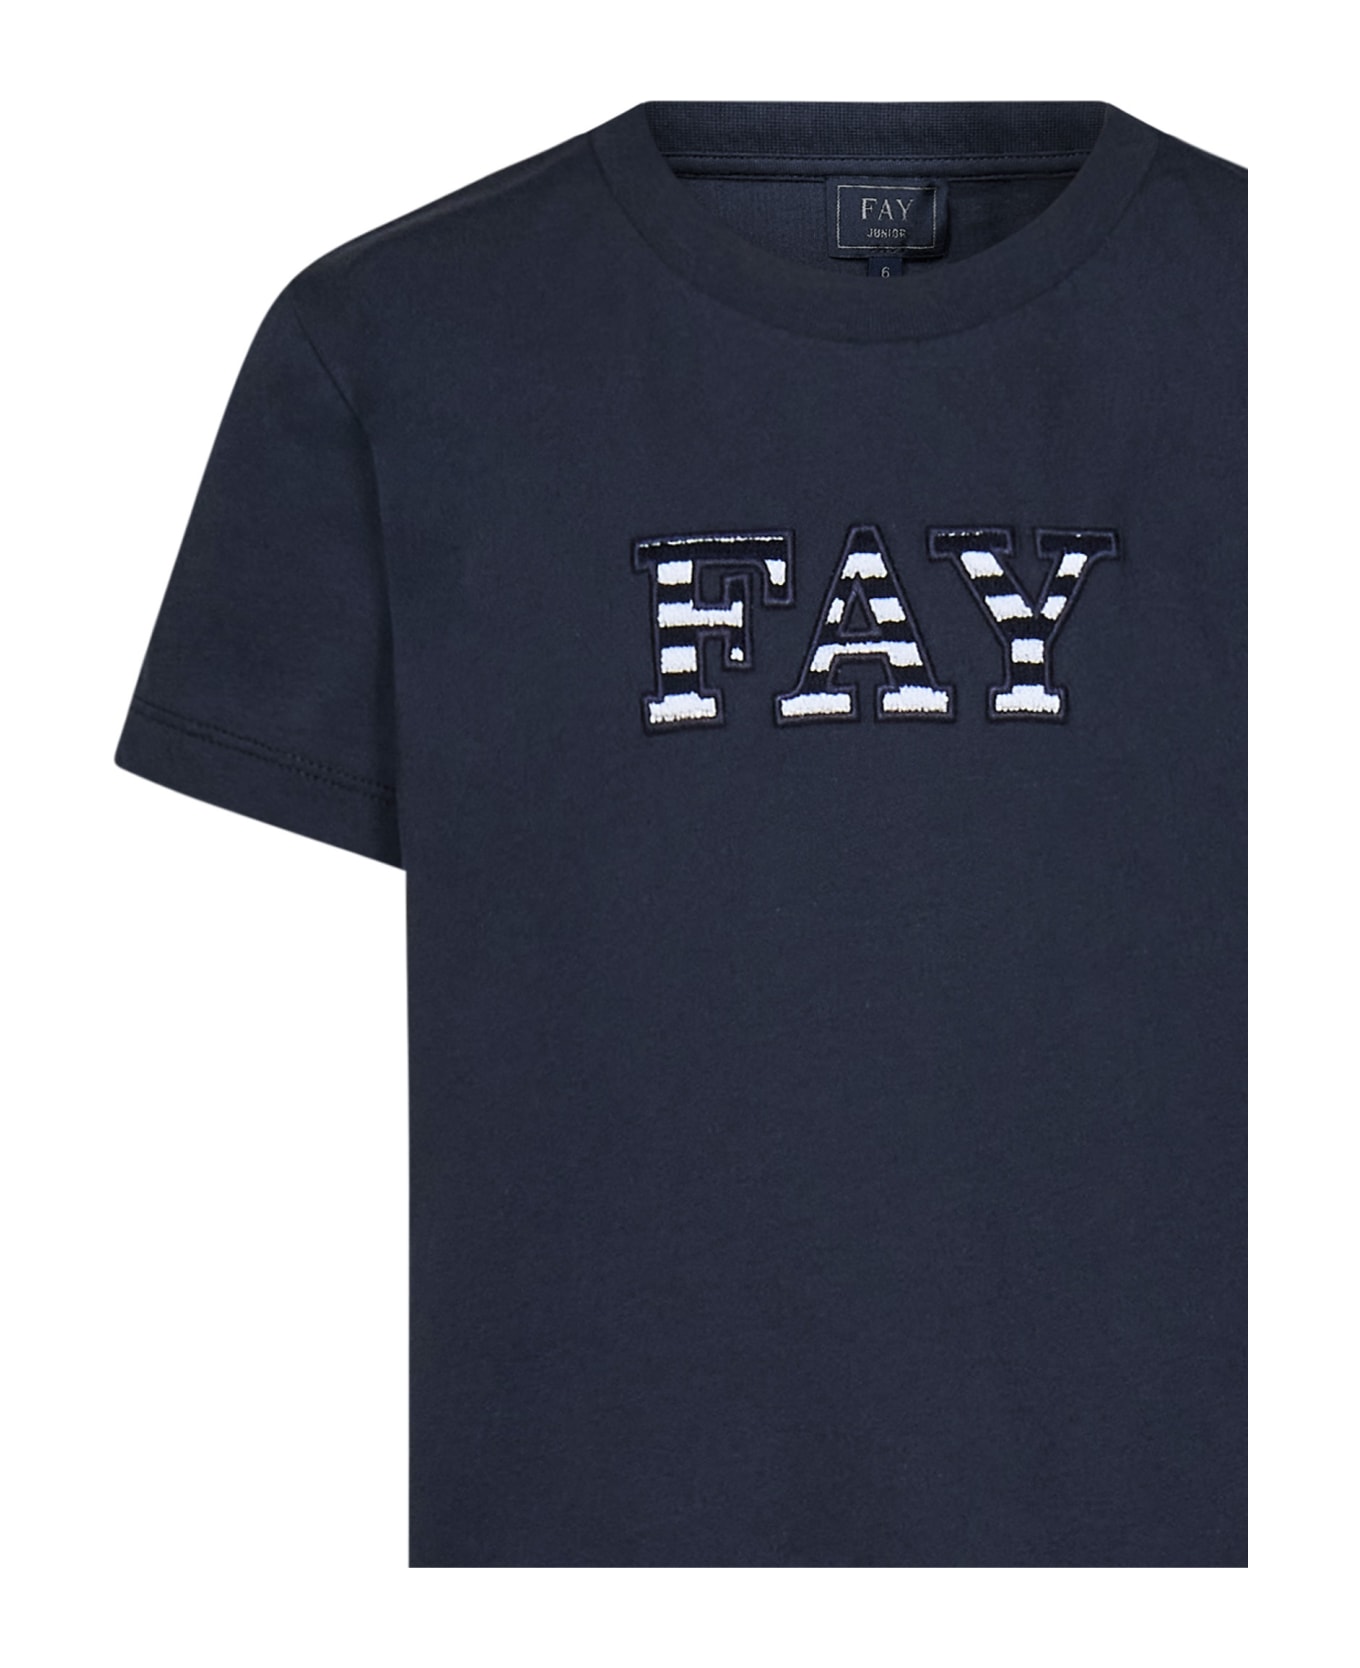 Fay Kids T-shirt - Blue